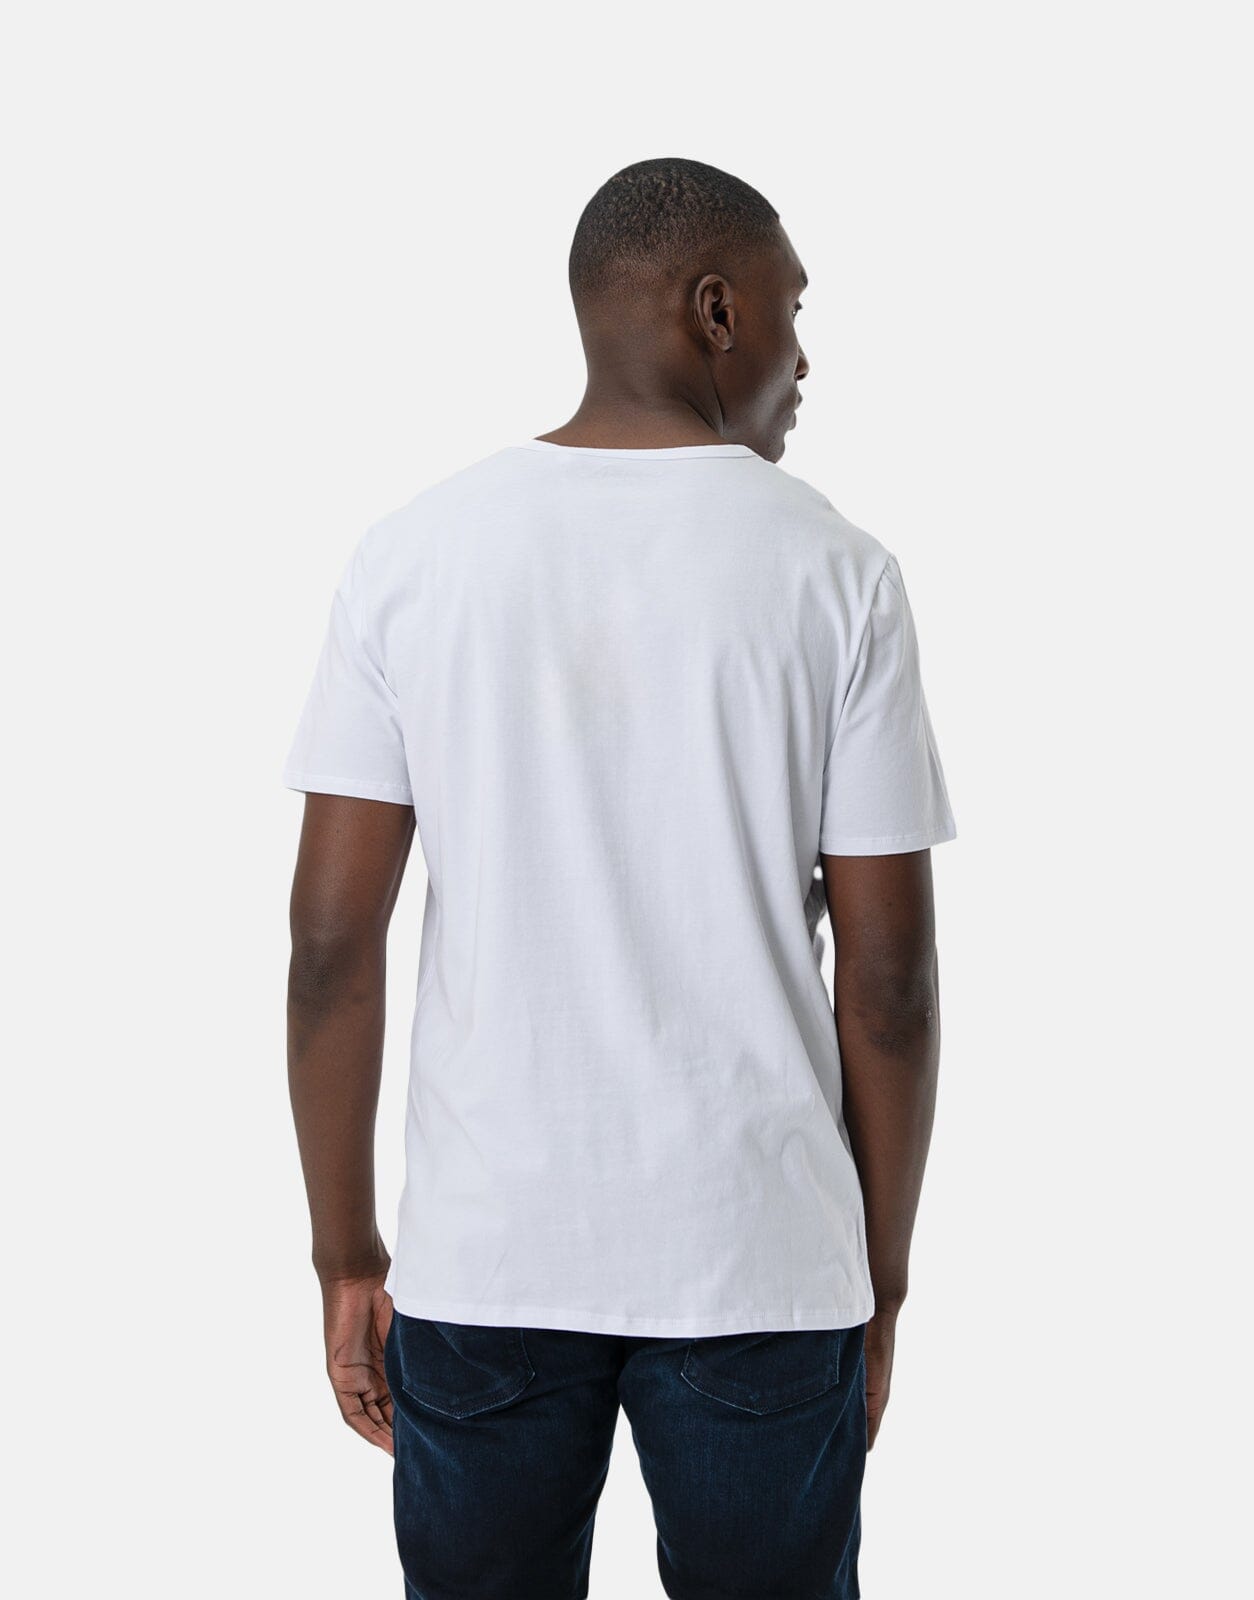 Guess Round Logo T-Shirt White - Subwear